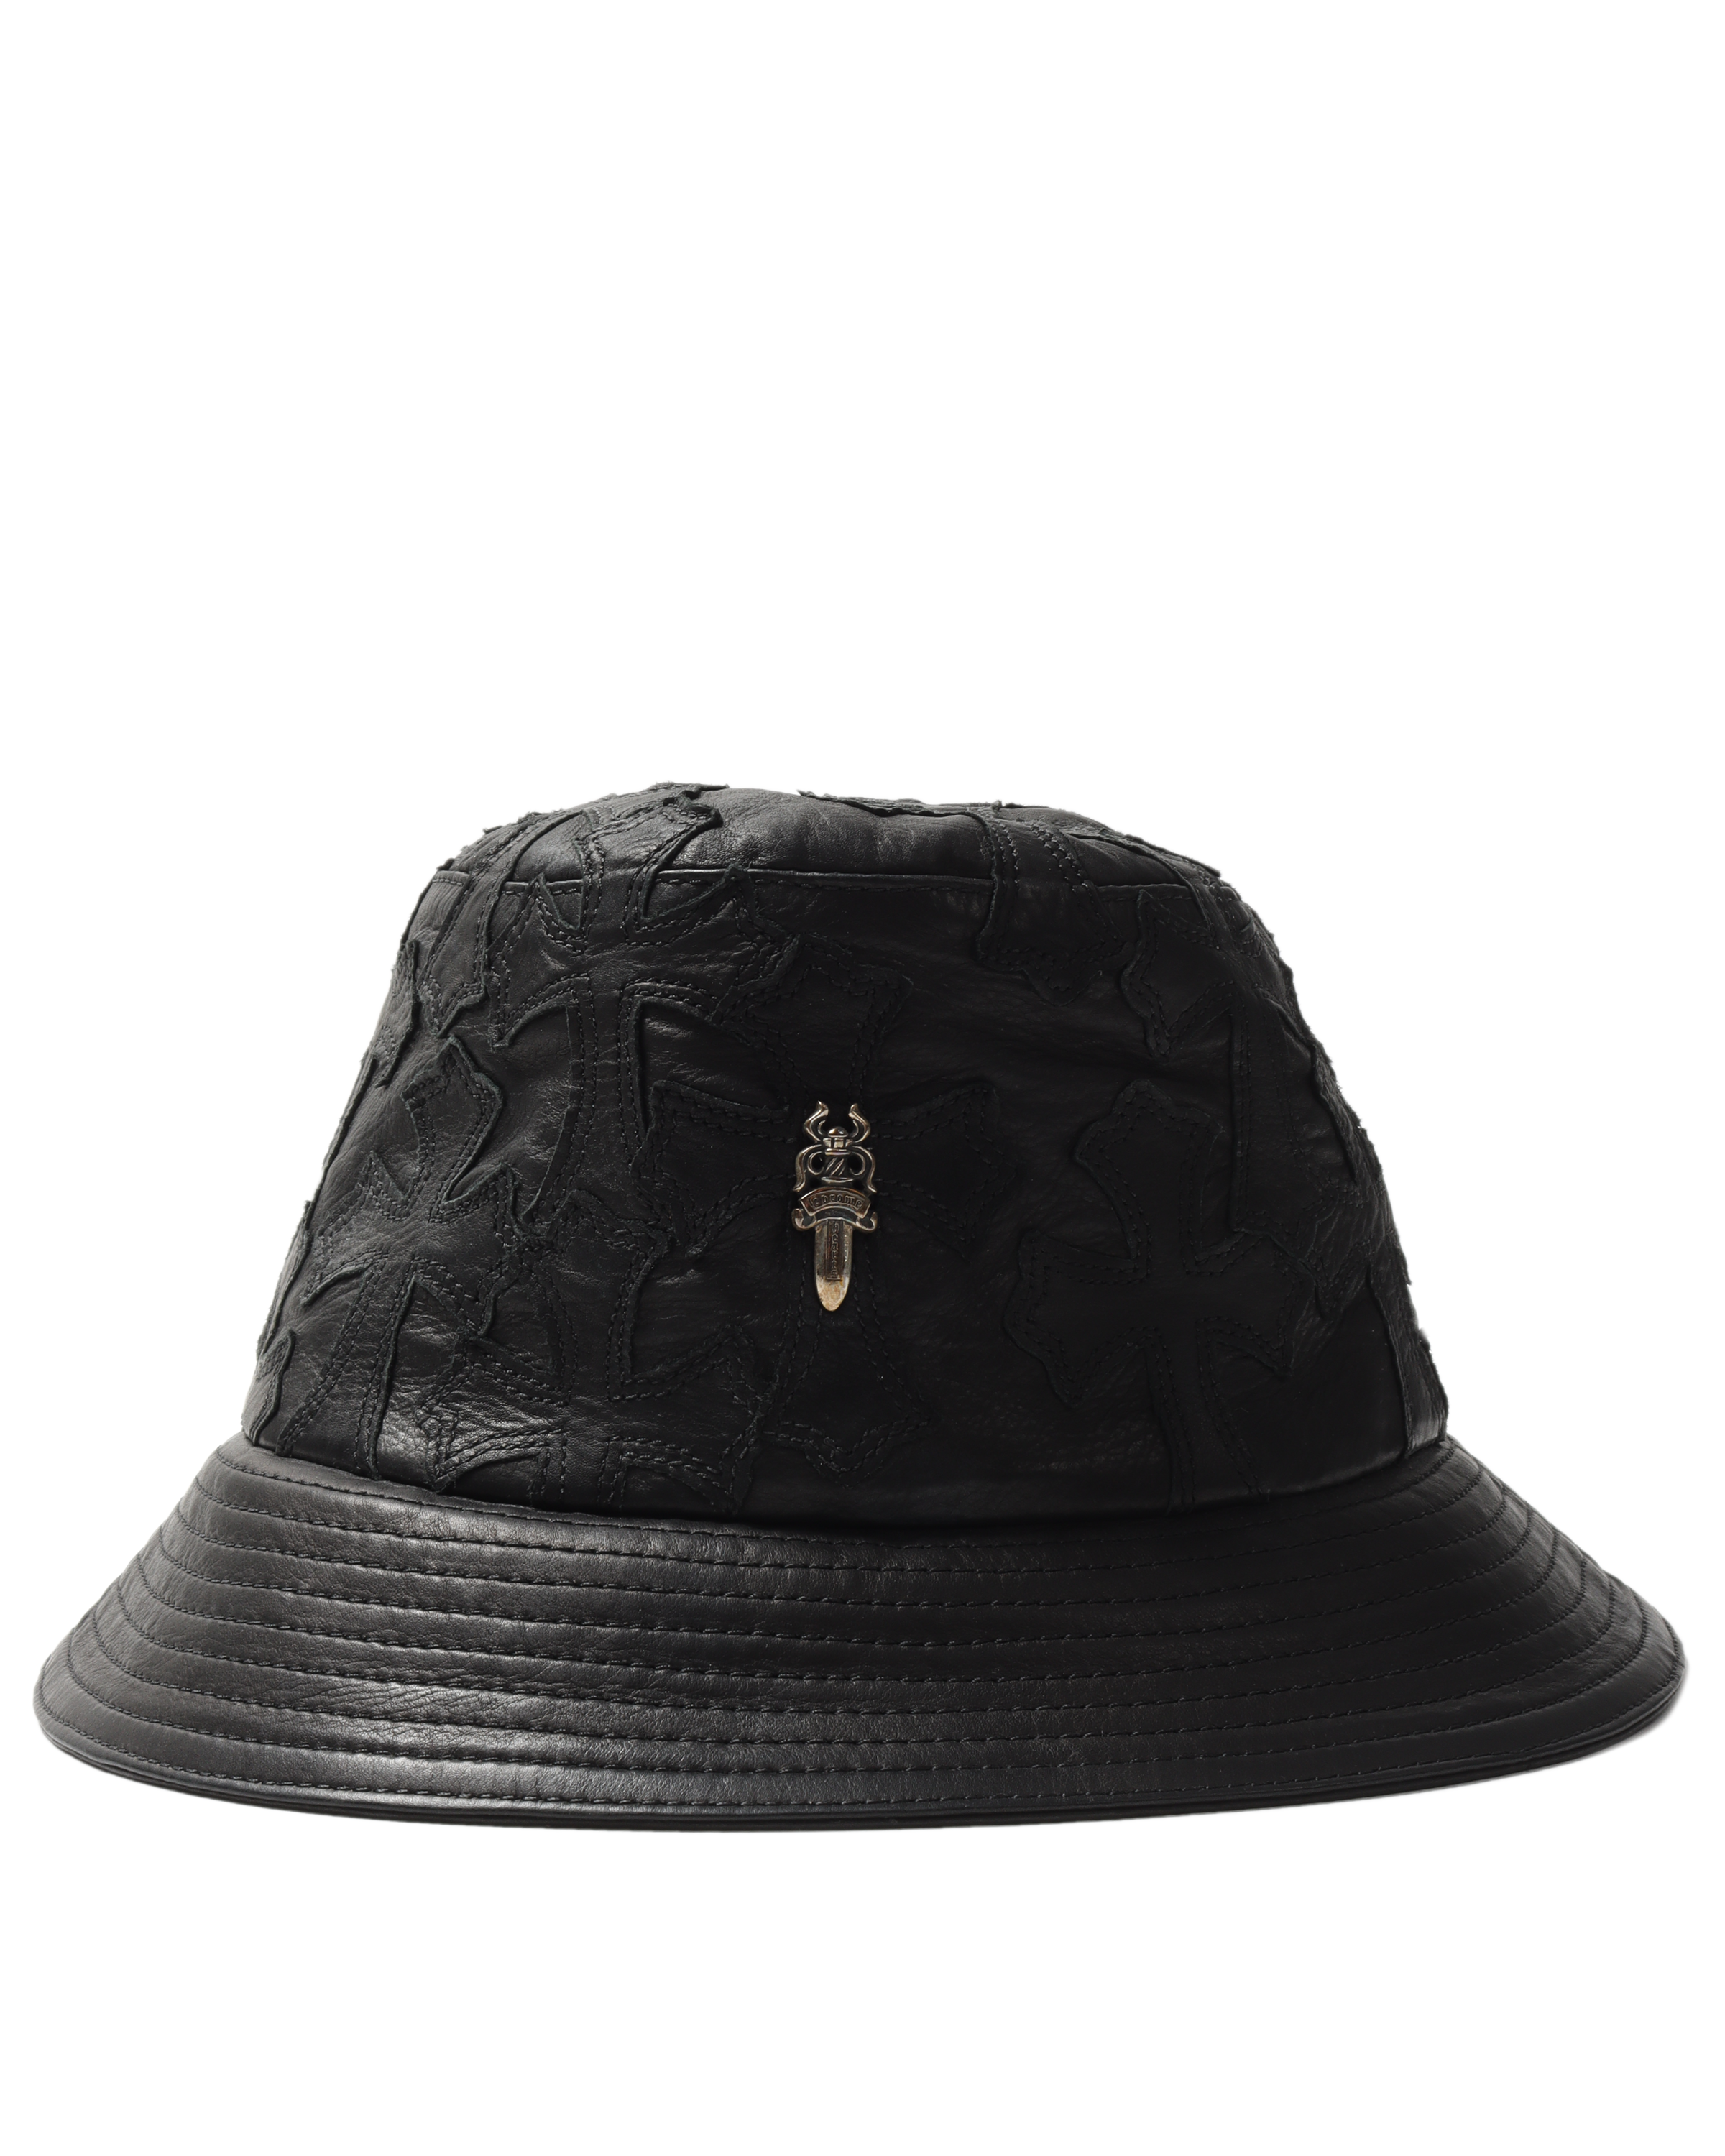 Leather Cross Patch Bucket Hat